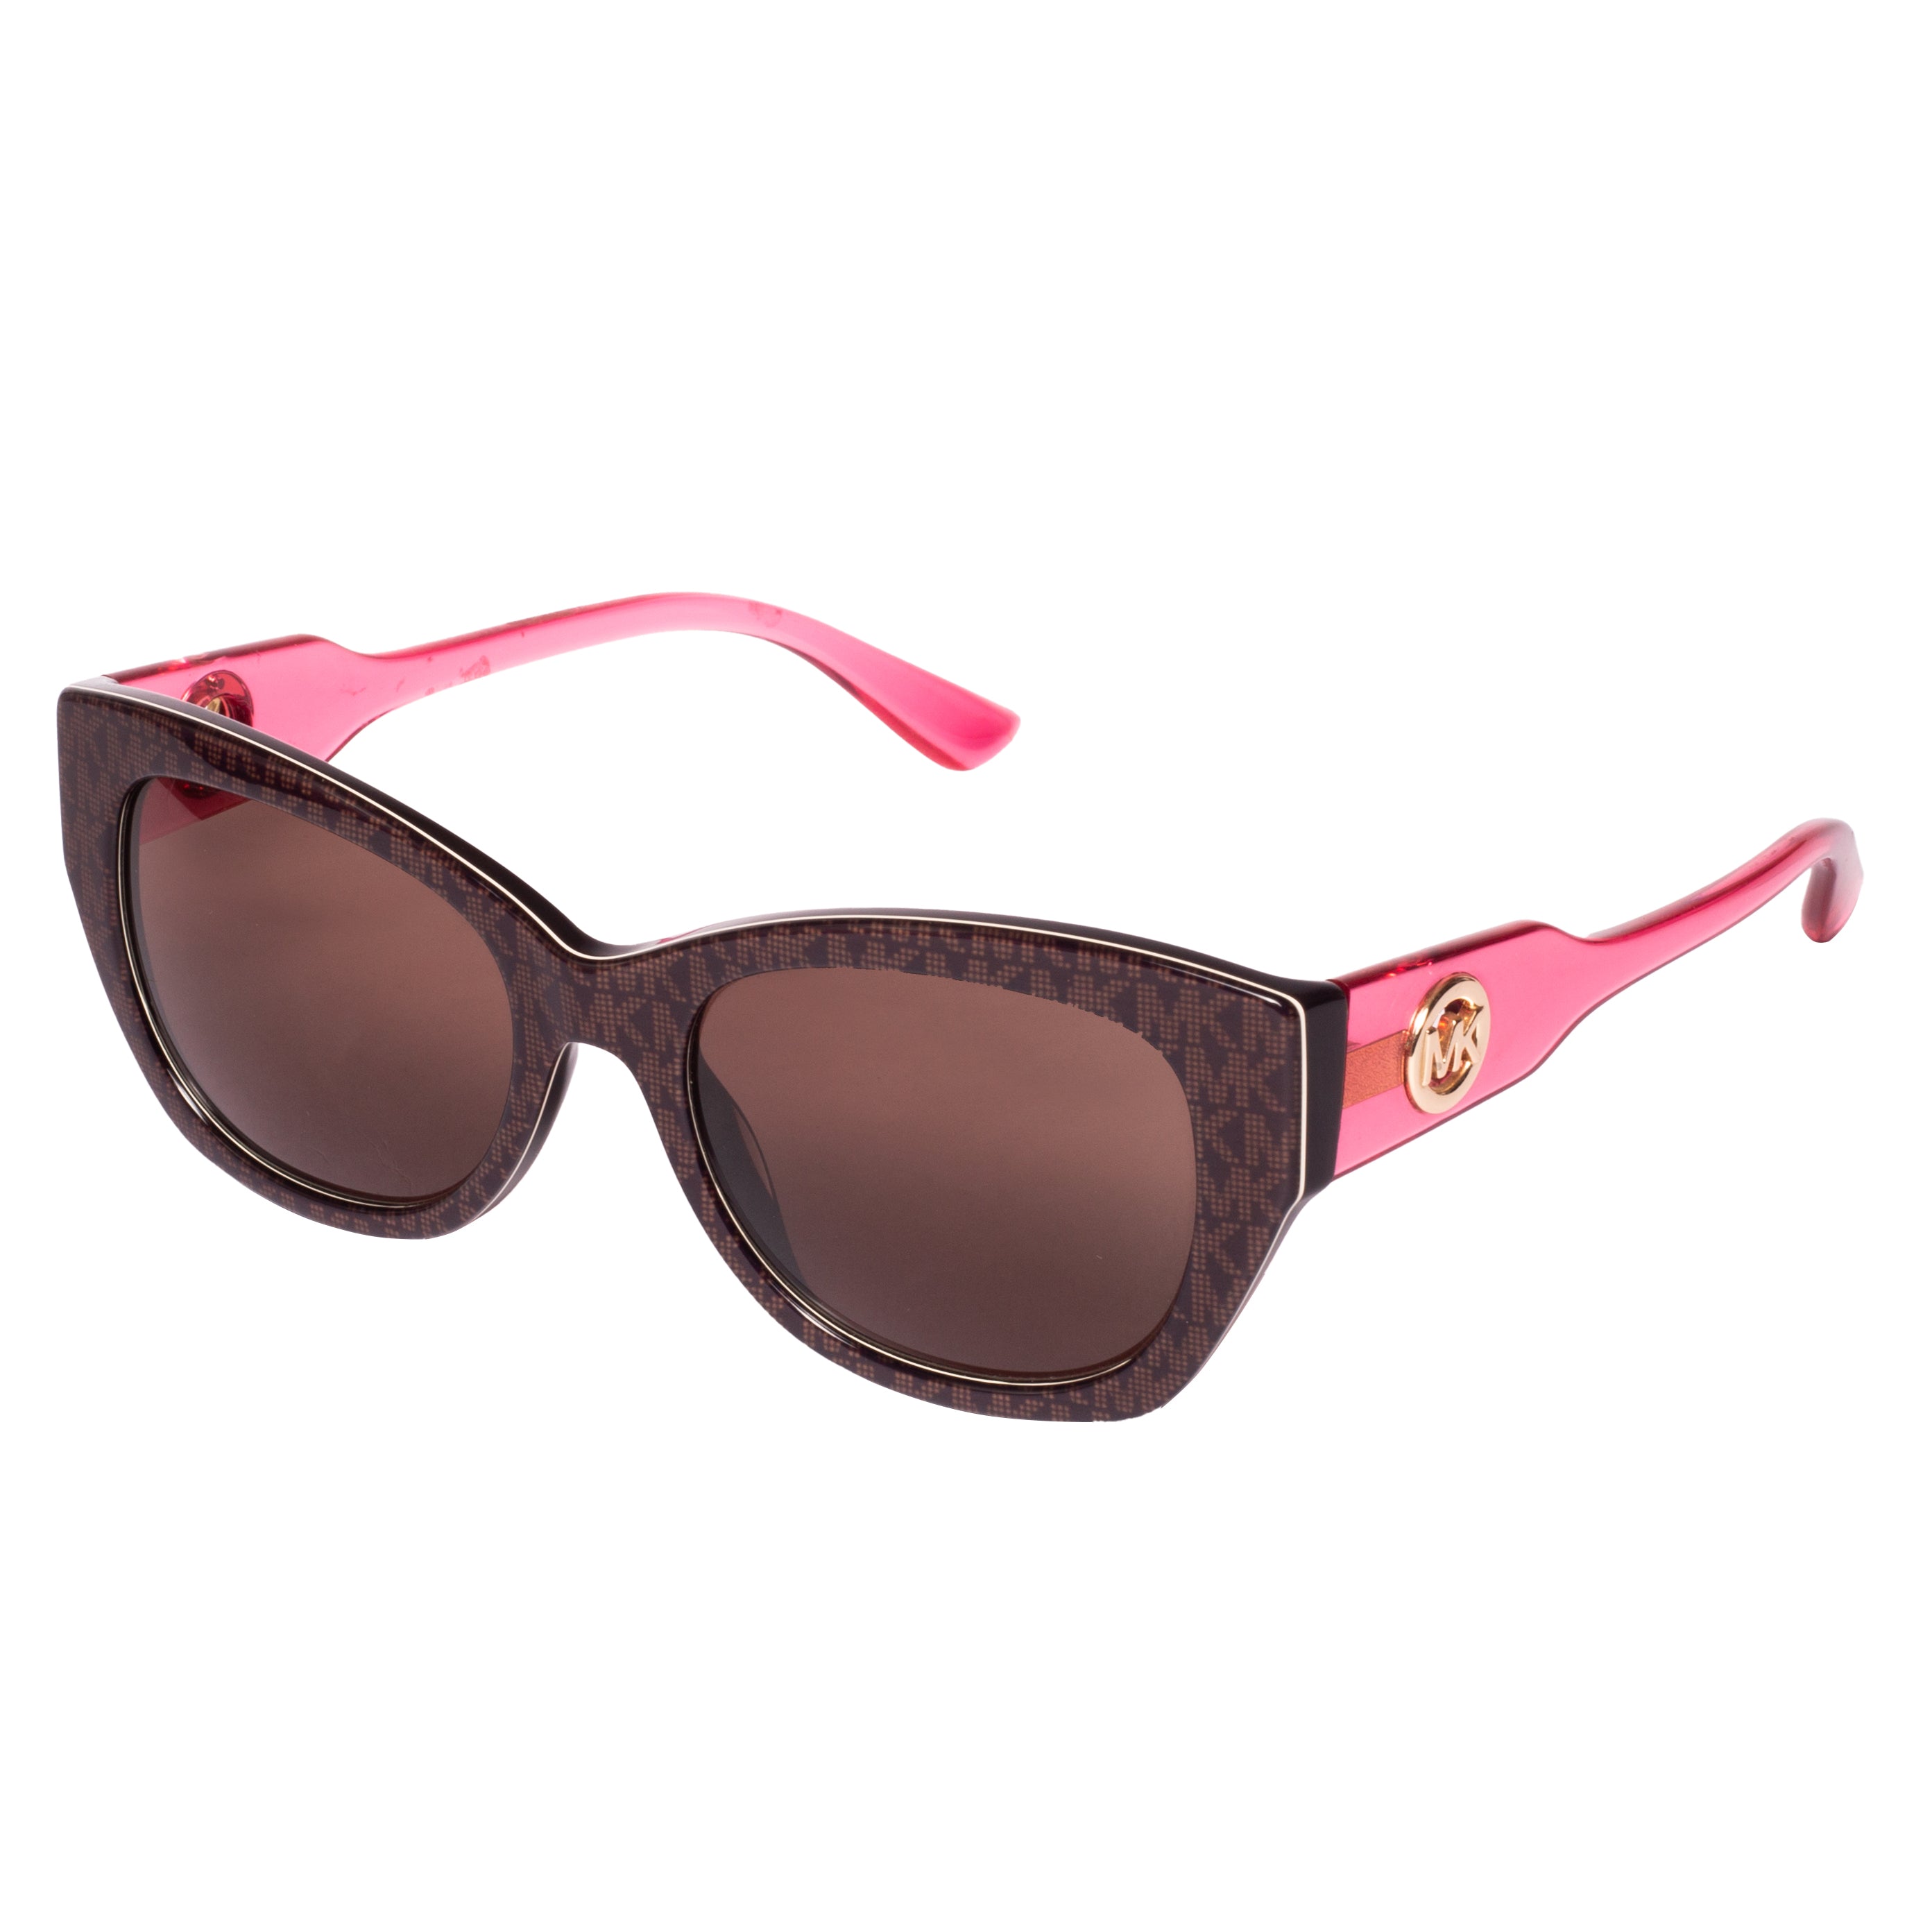 Michael Kors-2119-53-335573 Sunglasses - Premium Sunglasses from Michael Kors - Just Rs. 11290! Shop now at Laxmi Opticians